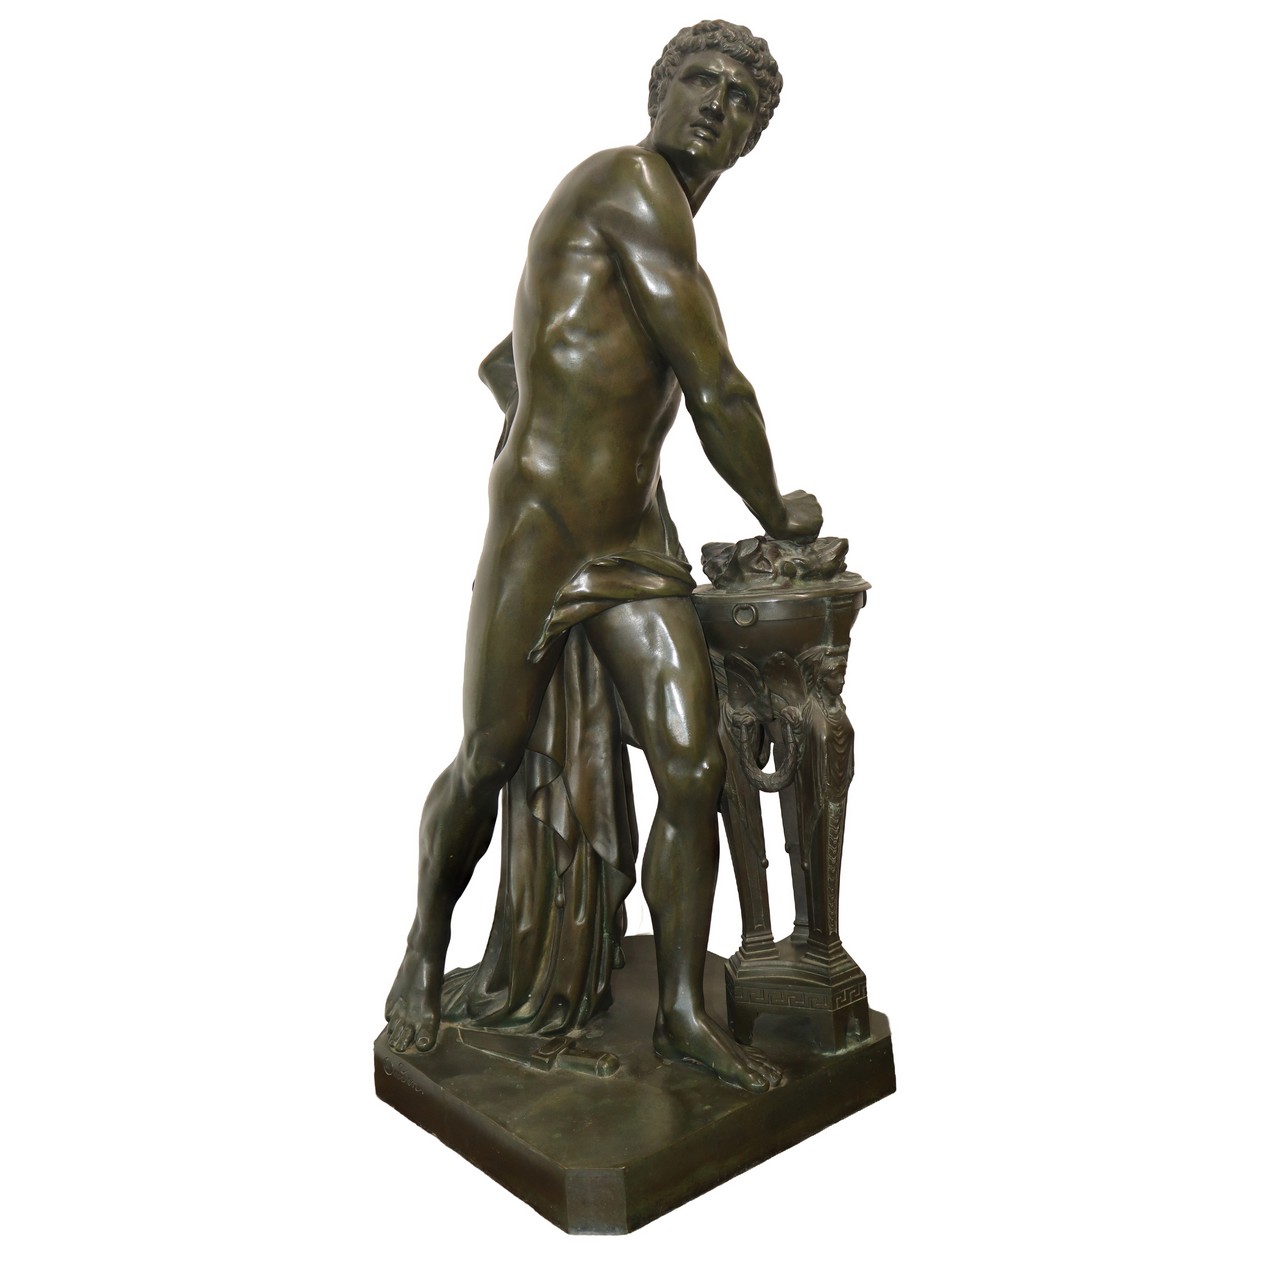 Oudin - Muzio Scevola in bronze, with wooden base - Image 2 of 4